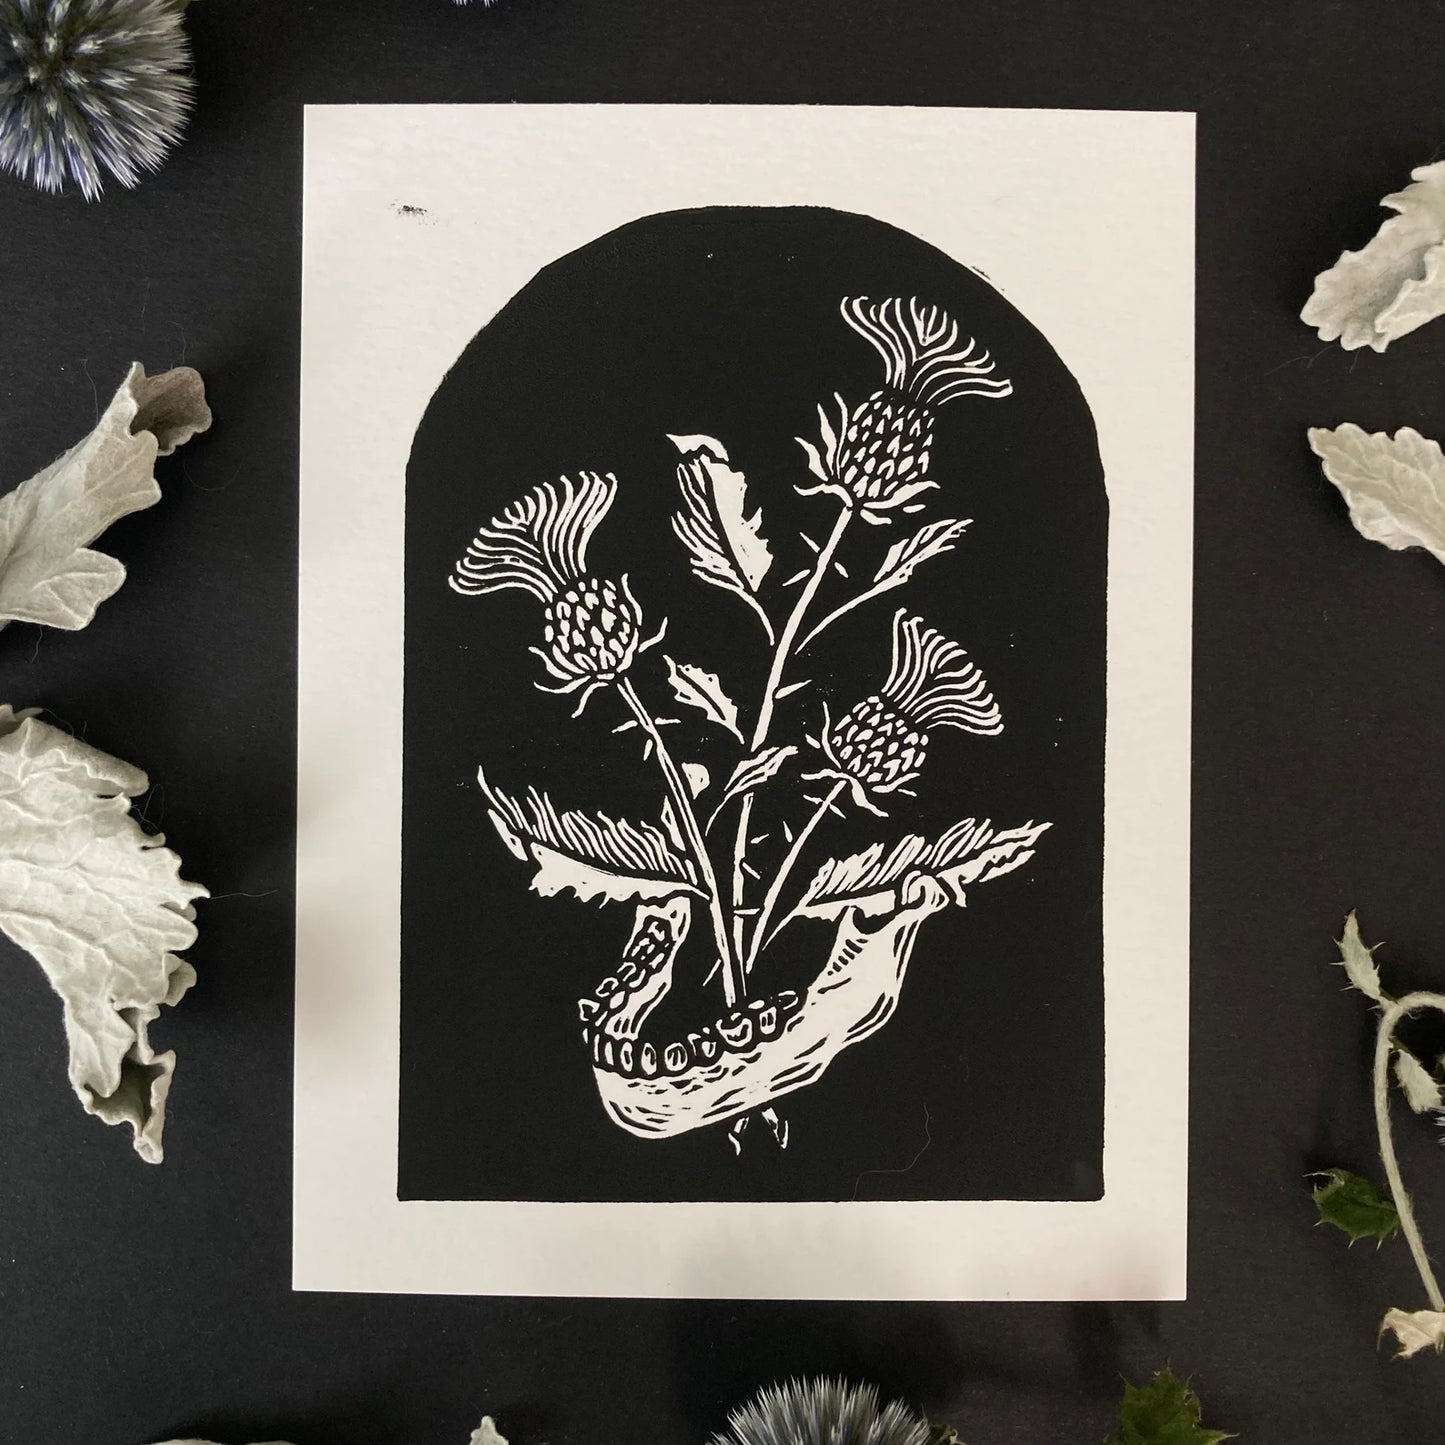 Moth & Bone "Silence" Linocut Print